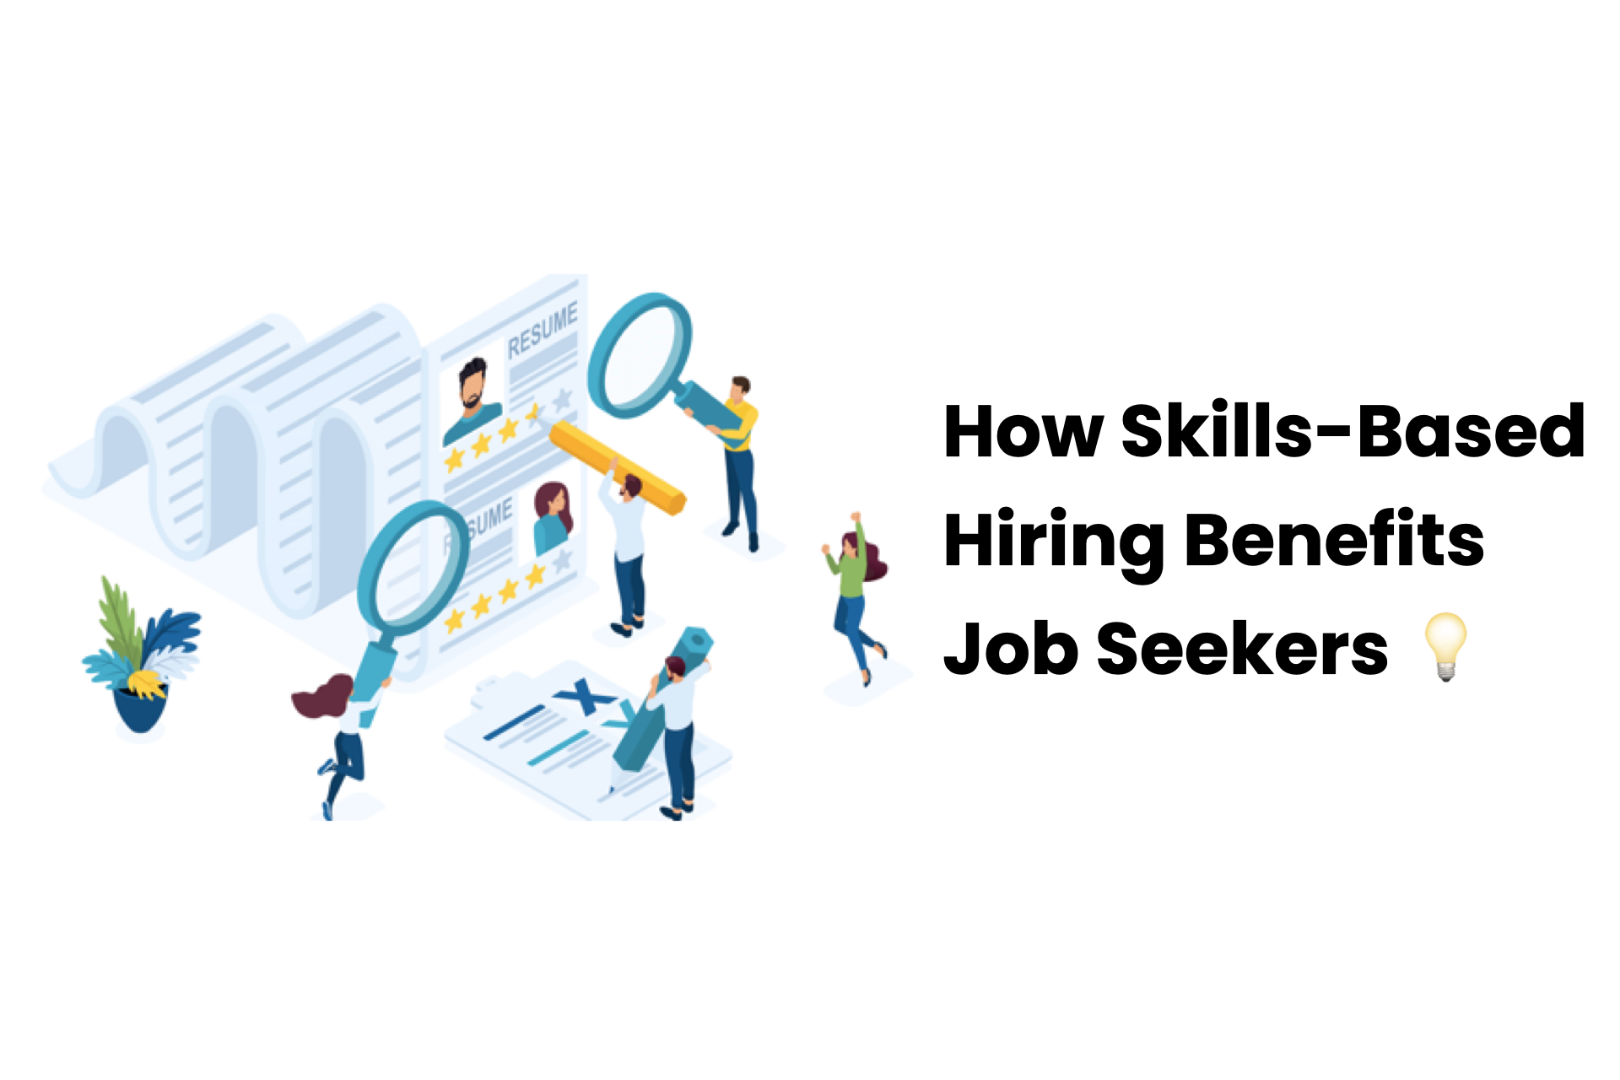 How Skills-Based Hiring Benefits Job Seekers